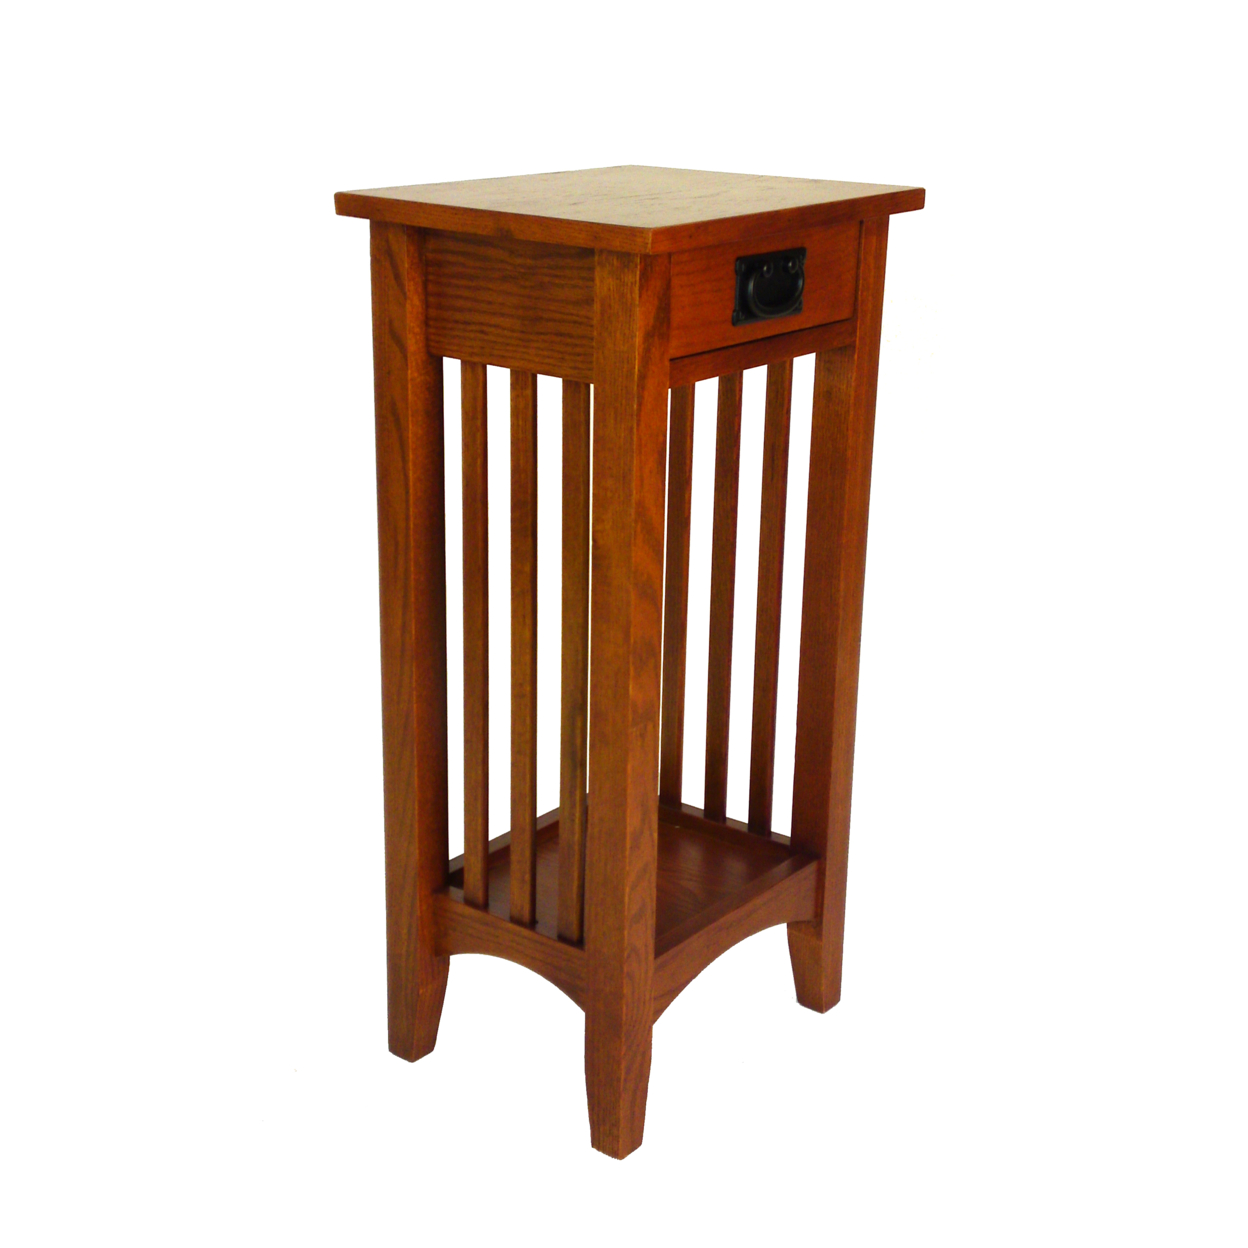 Wooden Pedestal Stand With 1 Drawer And Open Bottom Shelf, Oak Brown- Saltoro Sherpi